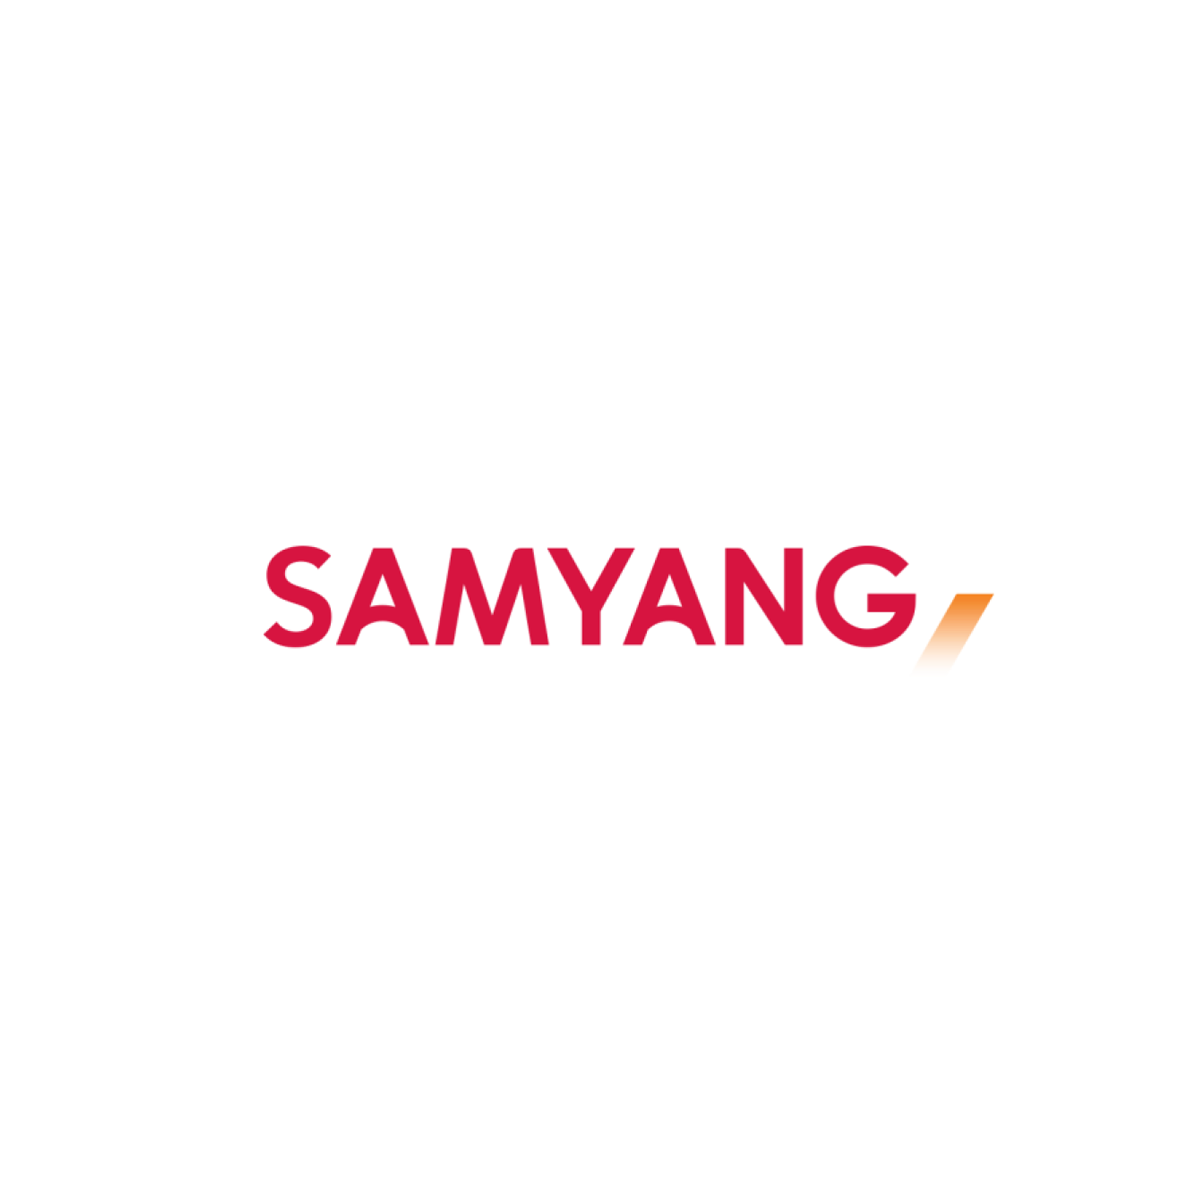 Samyang Logo.png